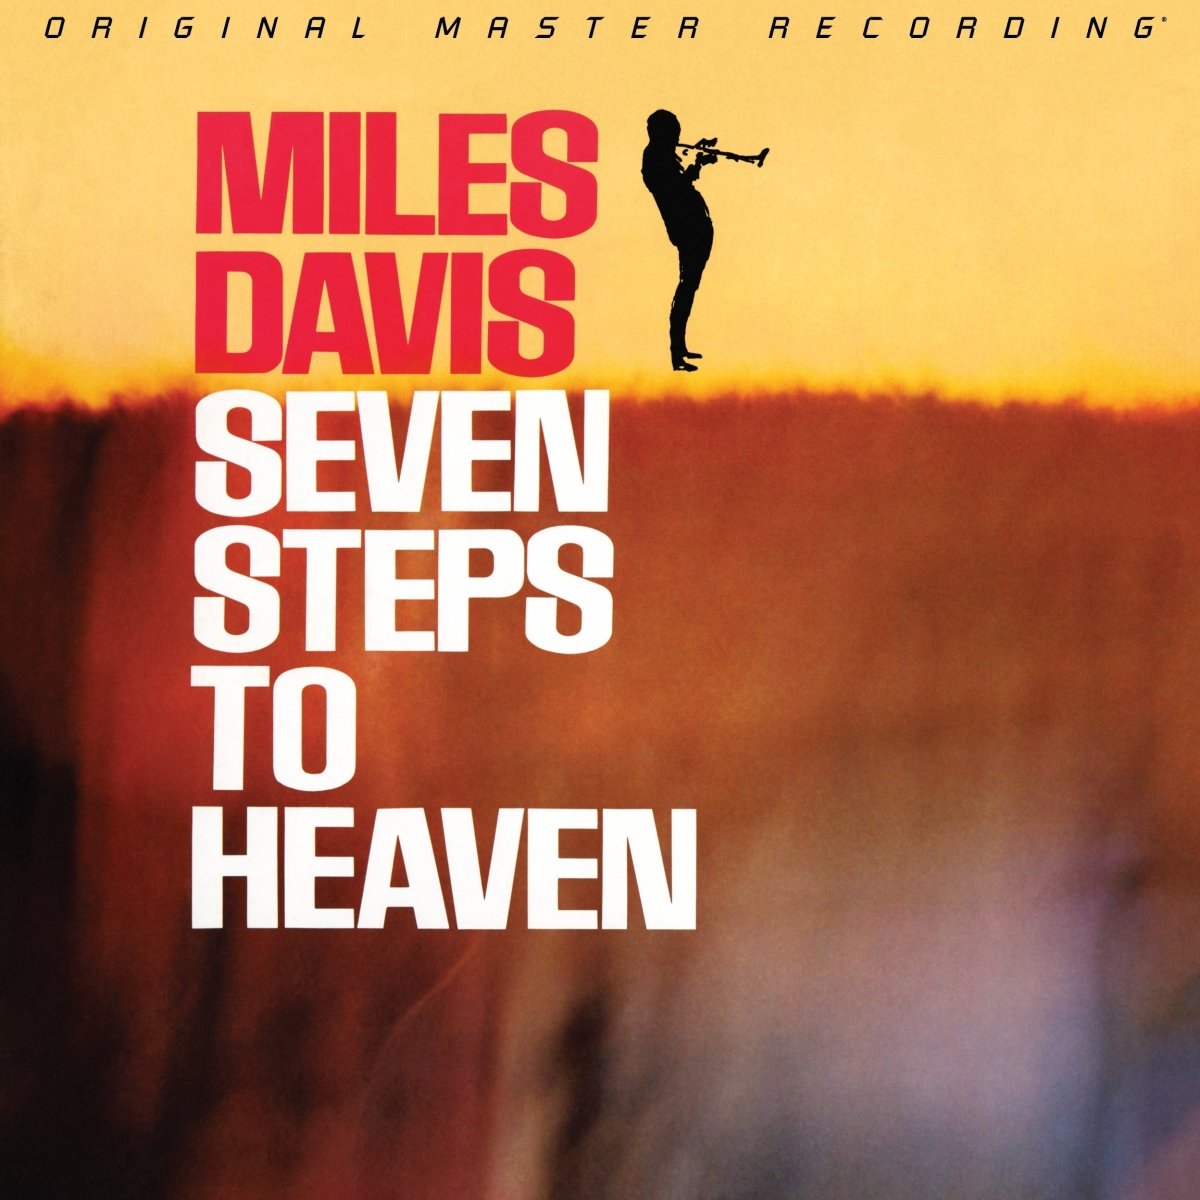 Seven Steps to Heaven - Miles Davis-Audio-Exchange